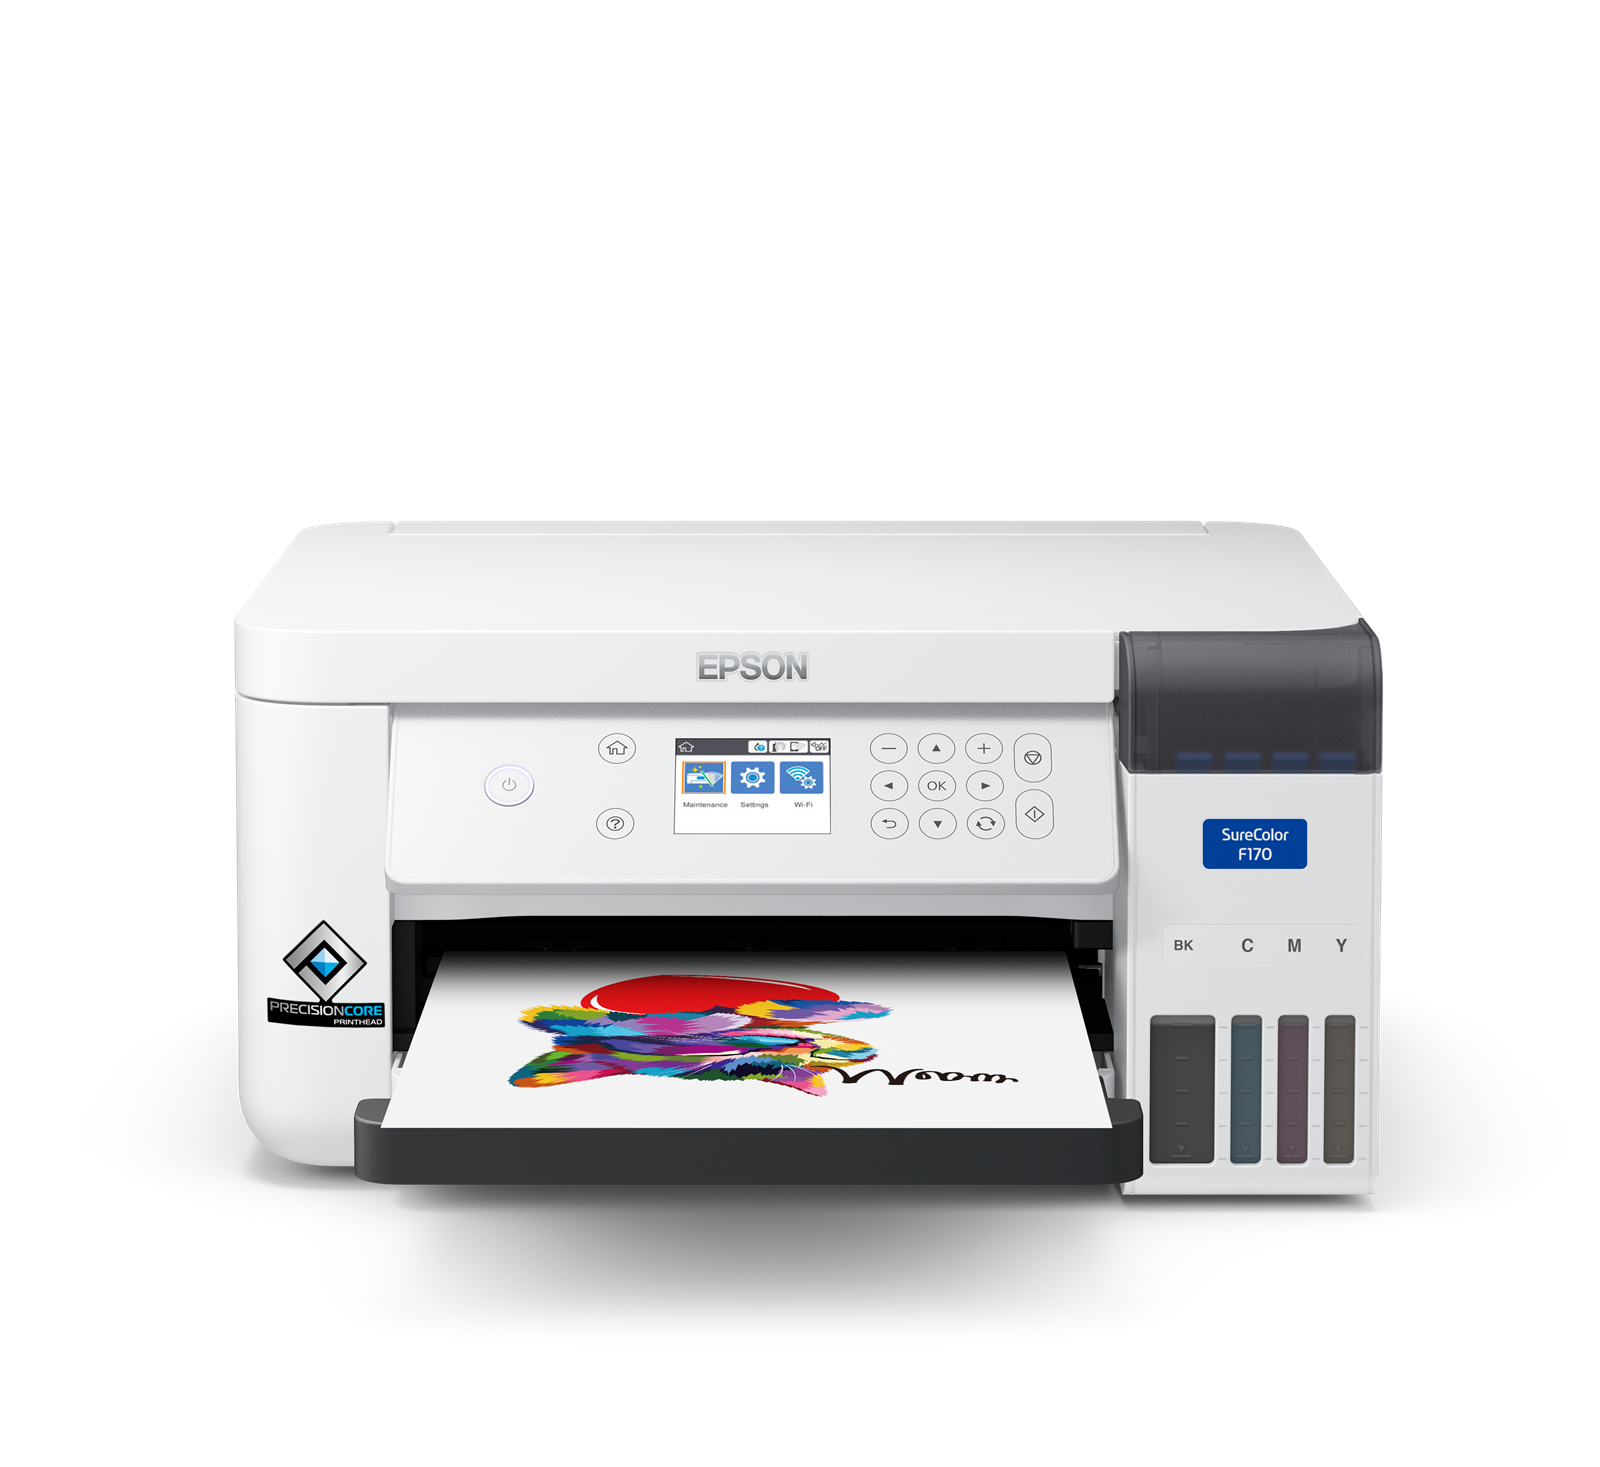 EPSON SureColor F170 Dye-Sublimation - 8.5 LexJet - Inkjet Printers, Media, Ink and More